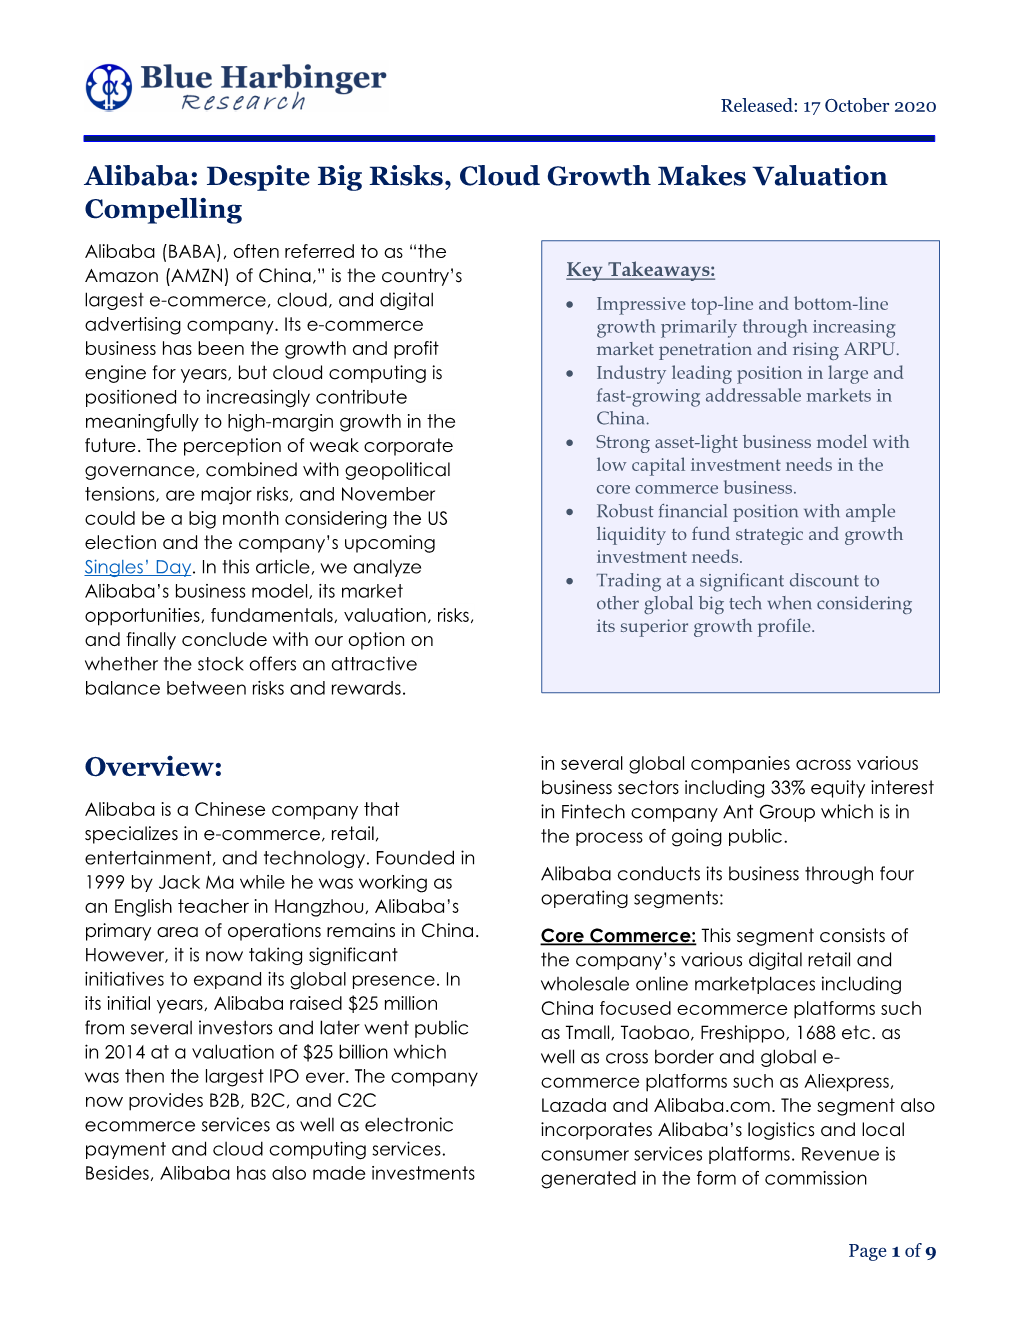 Alibaba: Despite Big Risks, Cloud Growth Makes Valuation Compelling